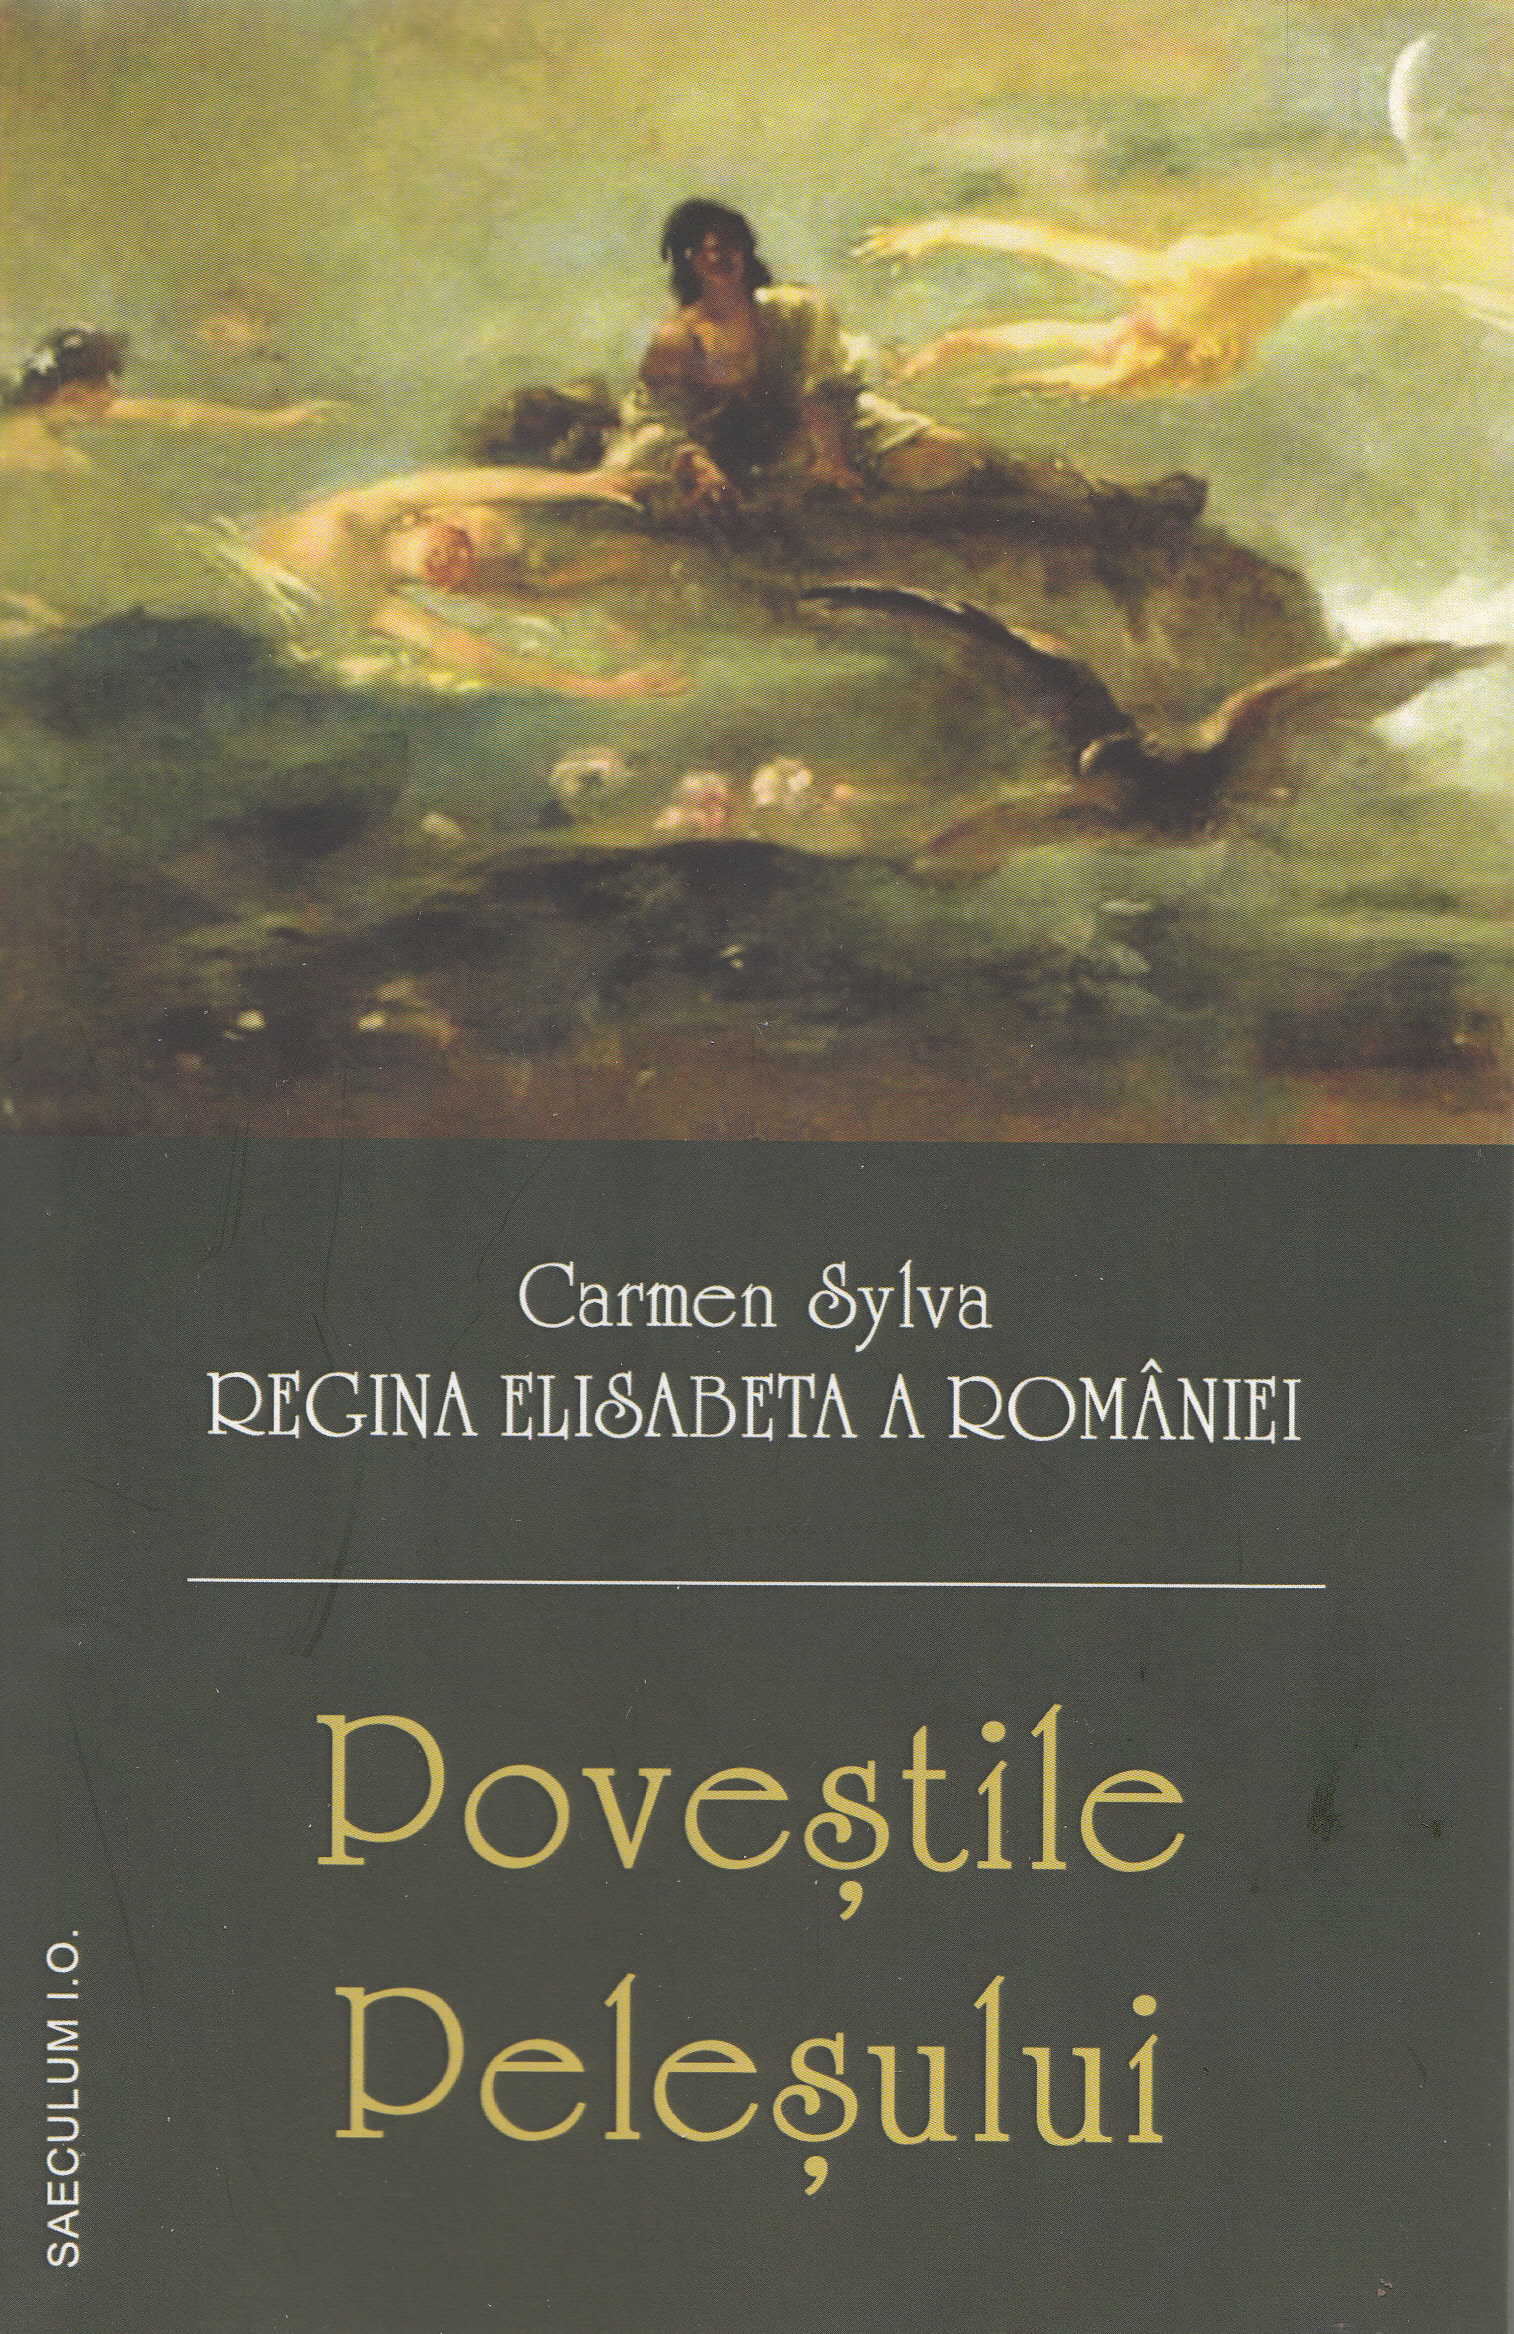 Povestile Pelesului - Carmen Sylva. Regina Elisabeta a Romaniei